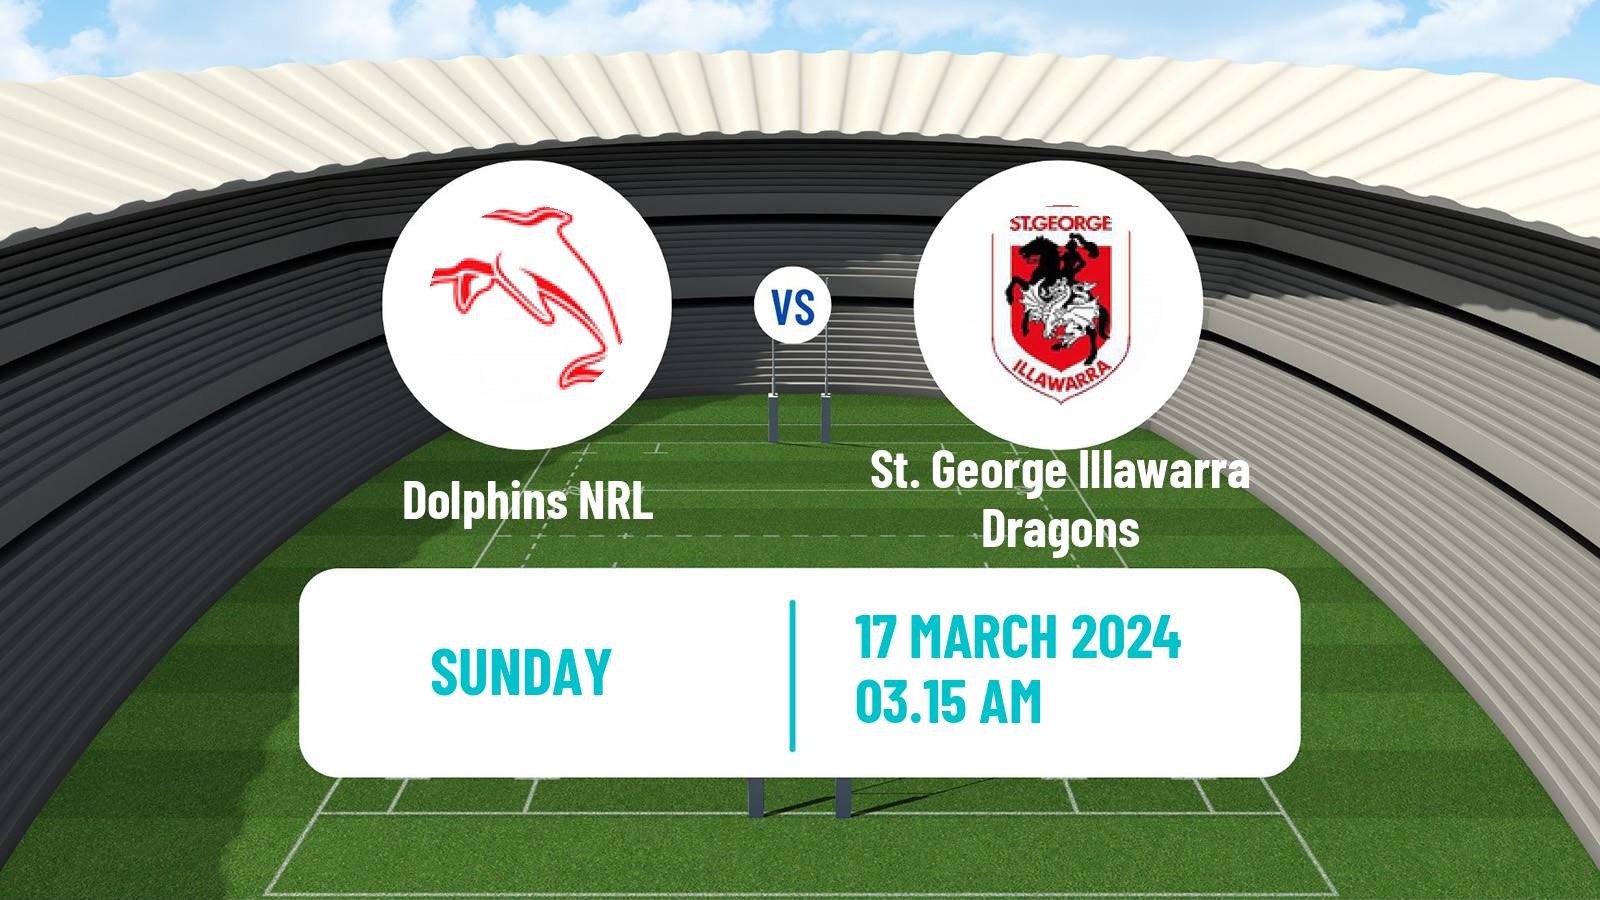 Rugby league Australian NRL Dolphins - St. George Illawarra Dragons